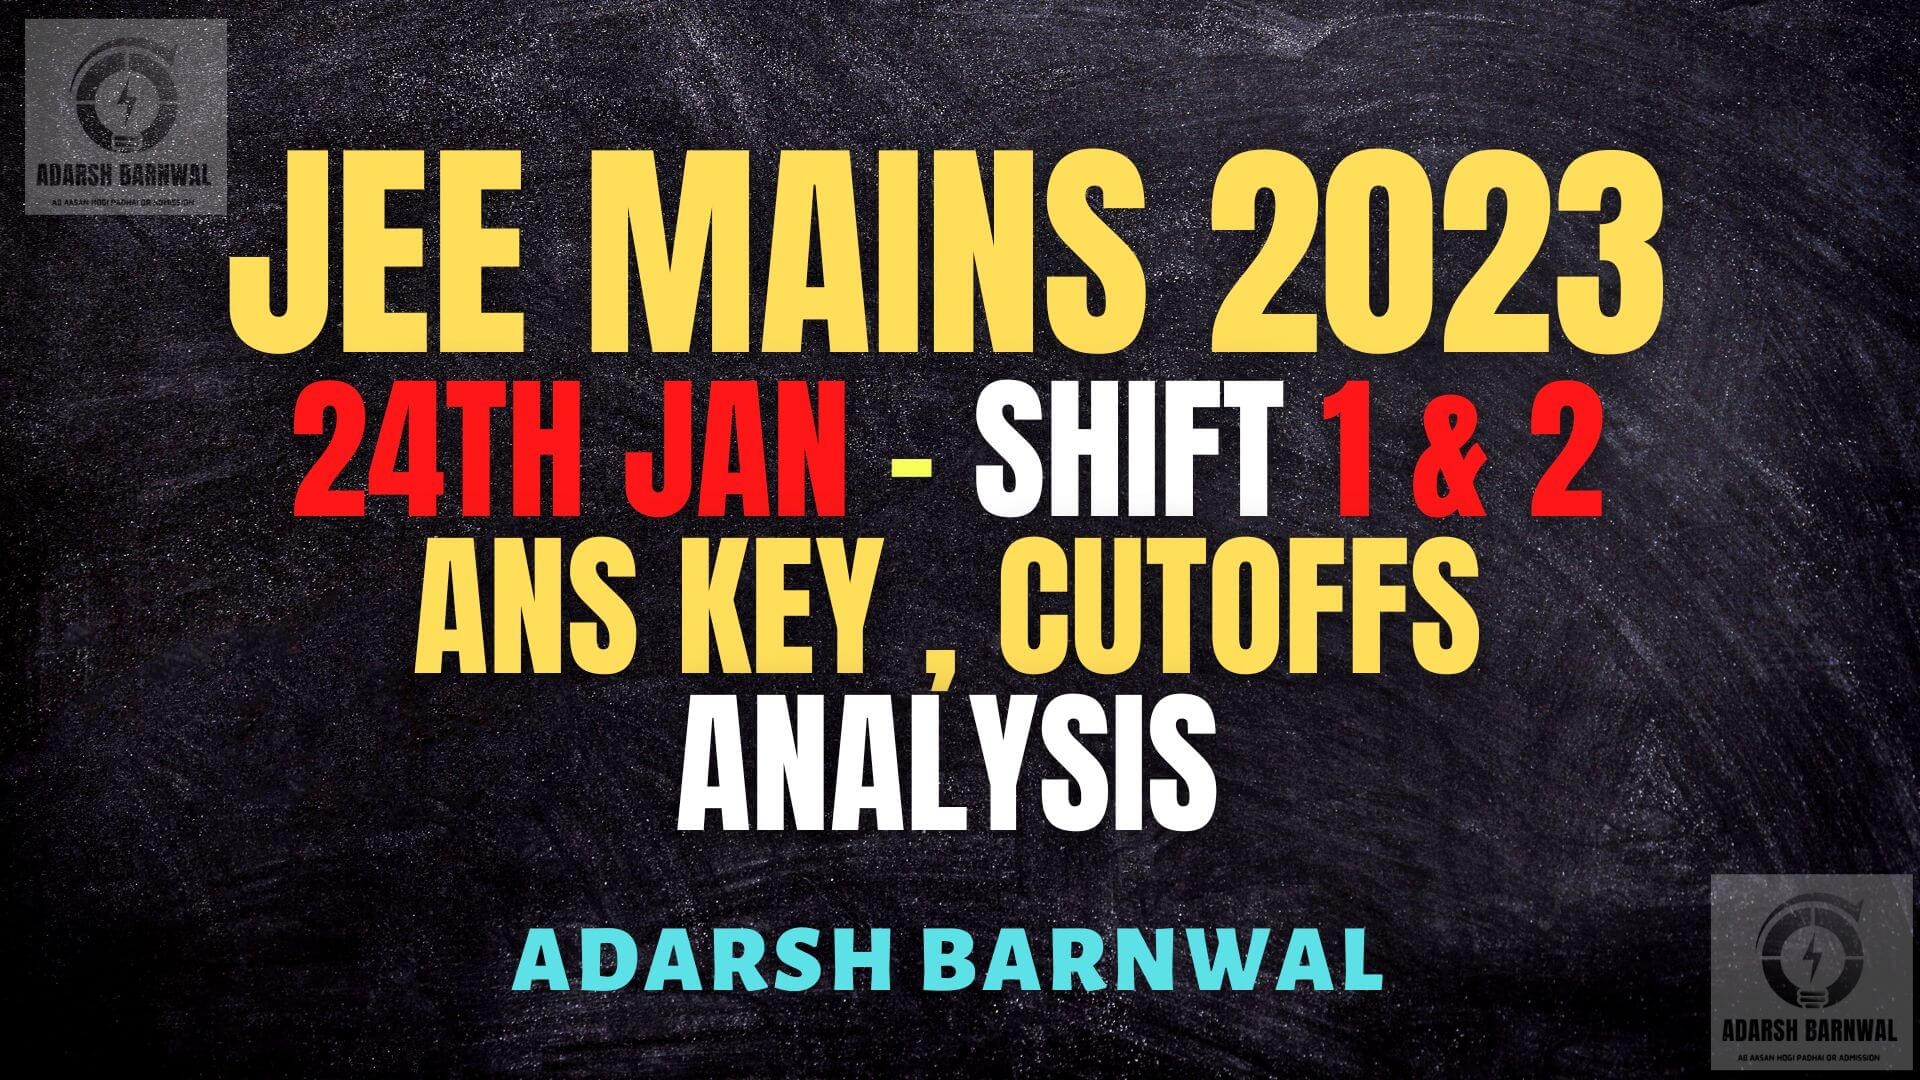 Jee Mains 2023 January 24 shift 1 & Shift 2 analysis ,Answer key , Expected cutoffs by adarsh barnwal